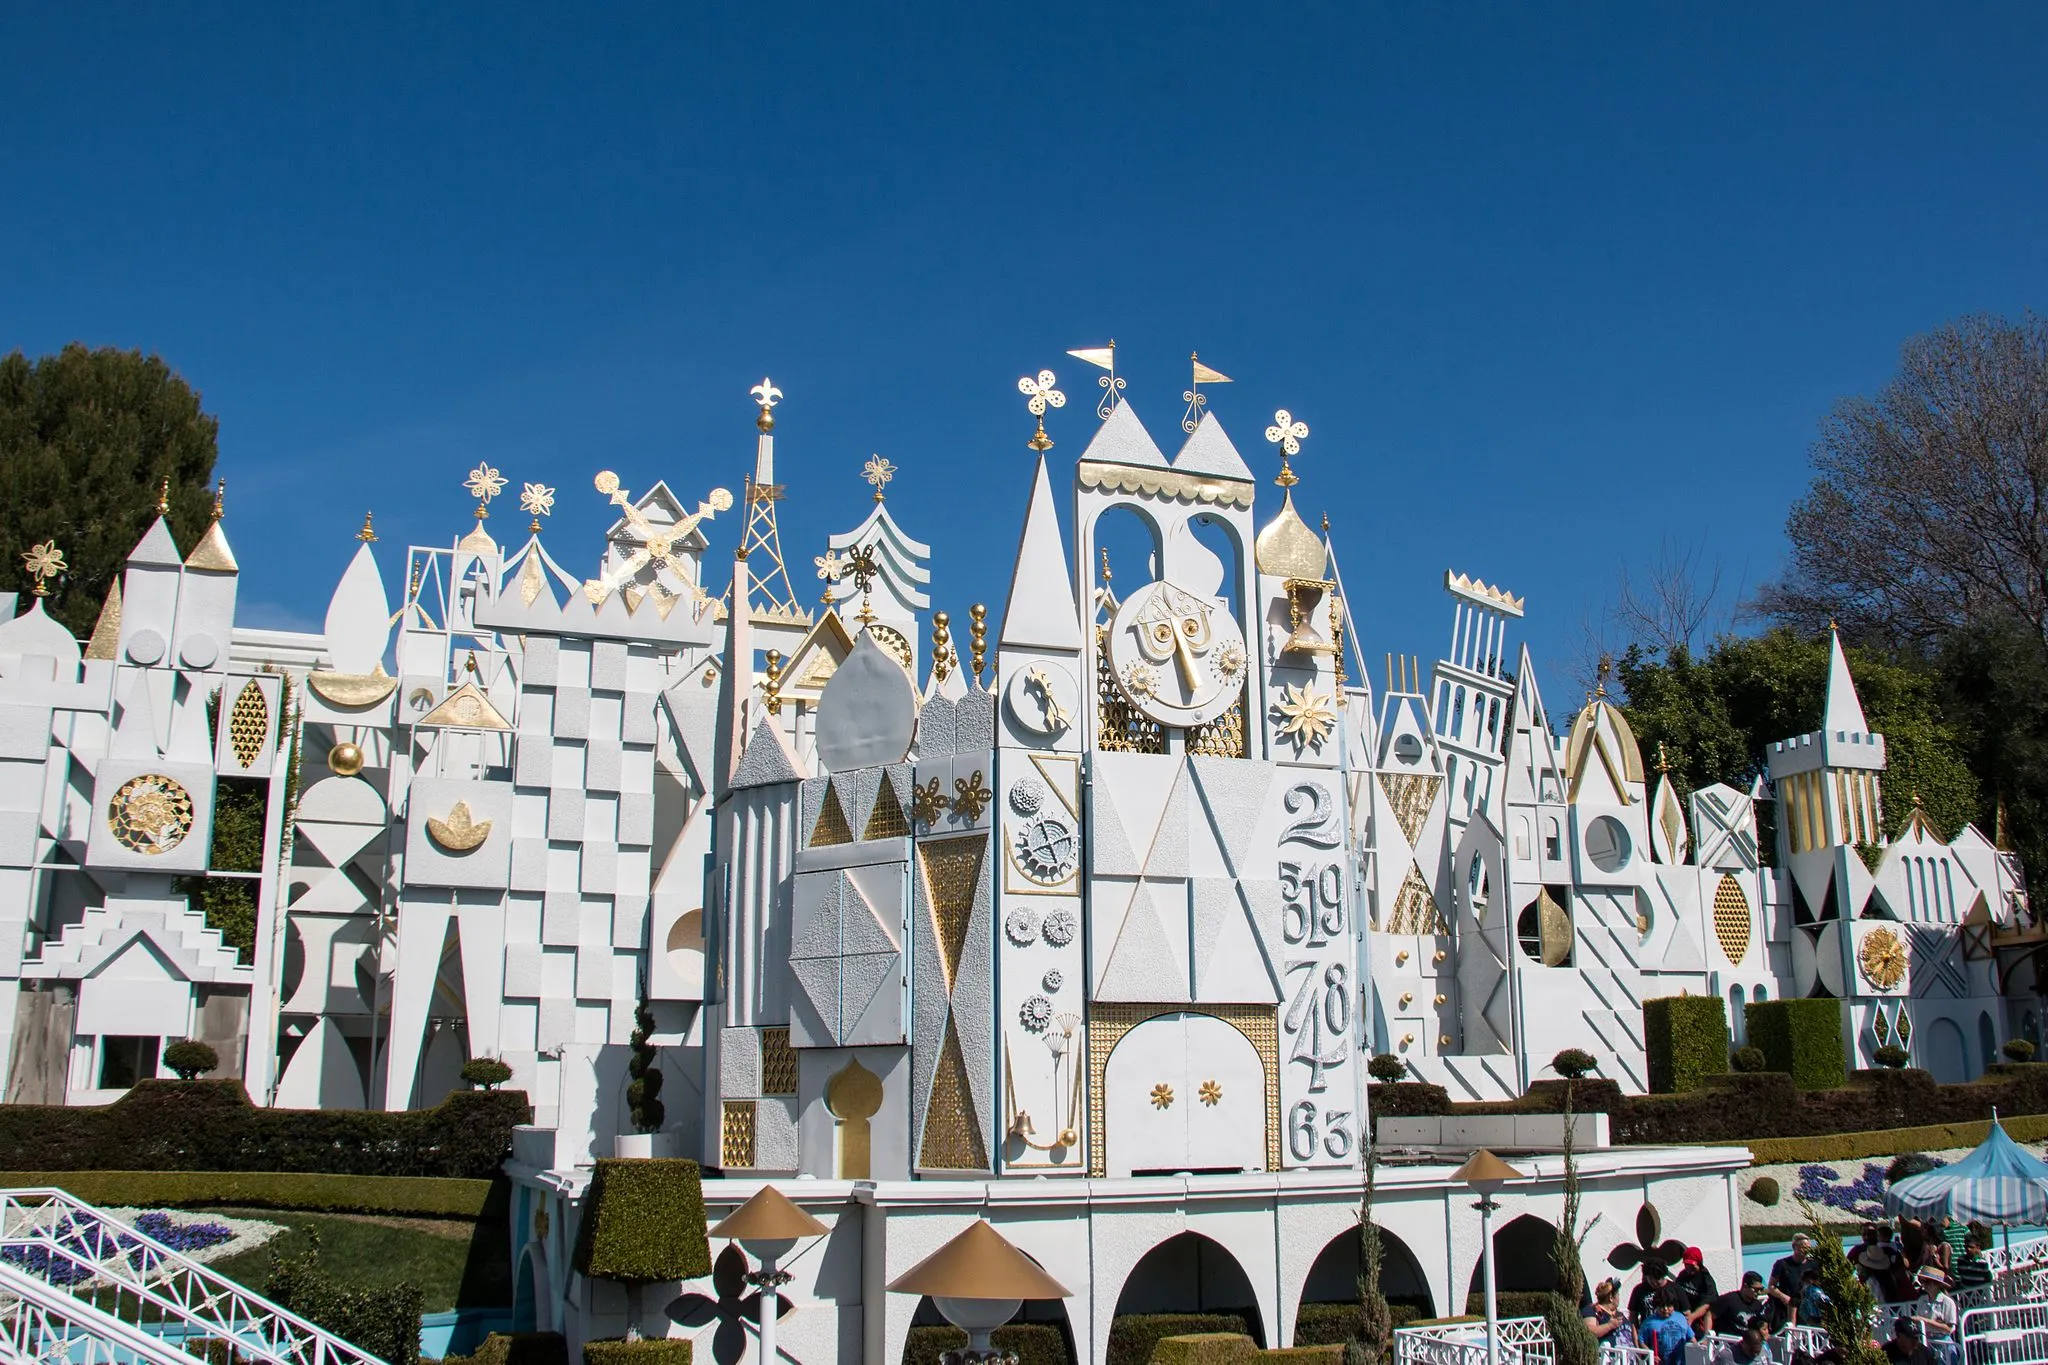 Photo showing: "it's a small world" in Fantasyland at Disneyland.